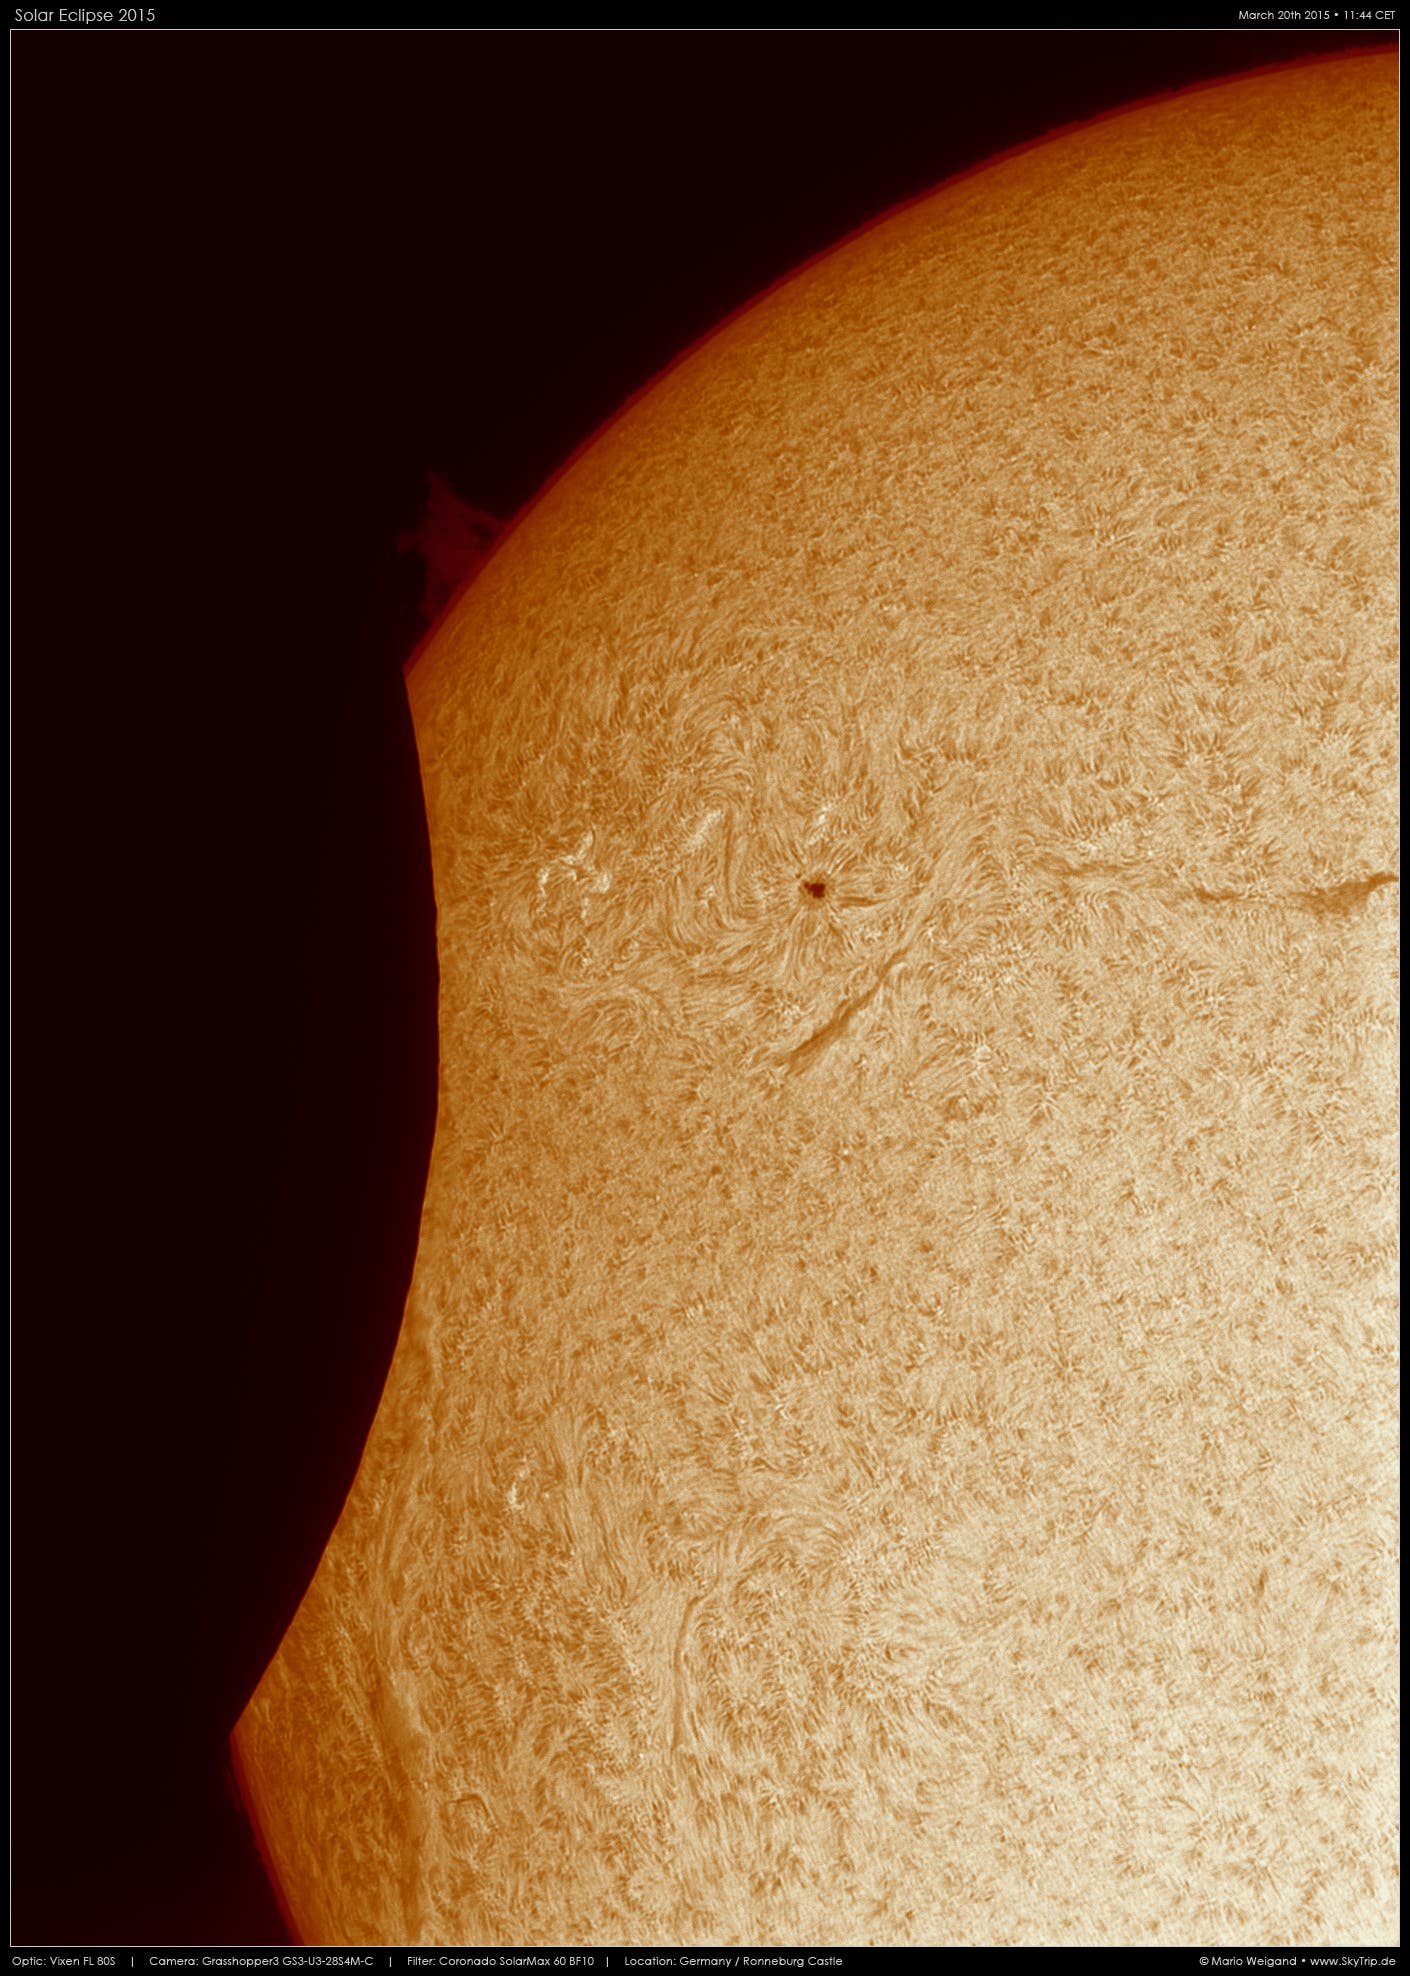 Sonnenfinsternis 2015 in H-Alpha